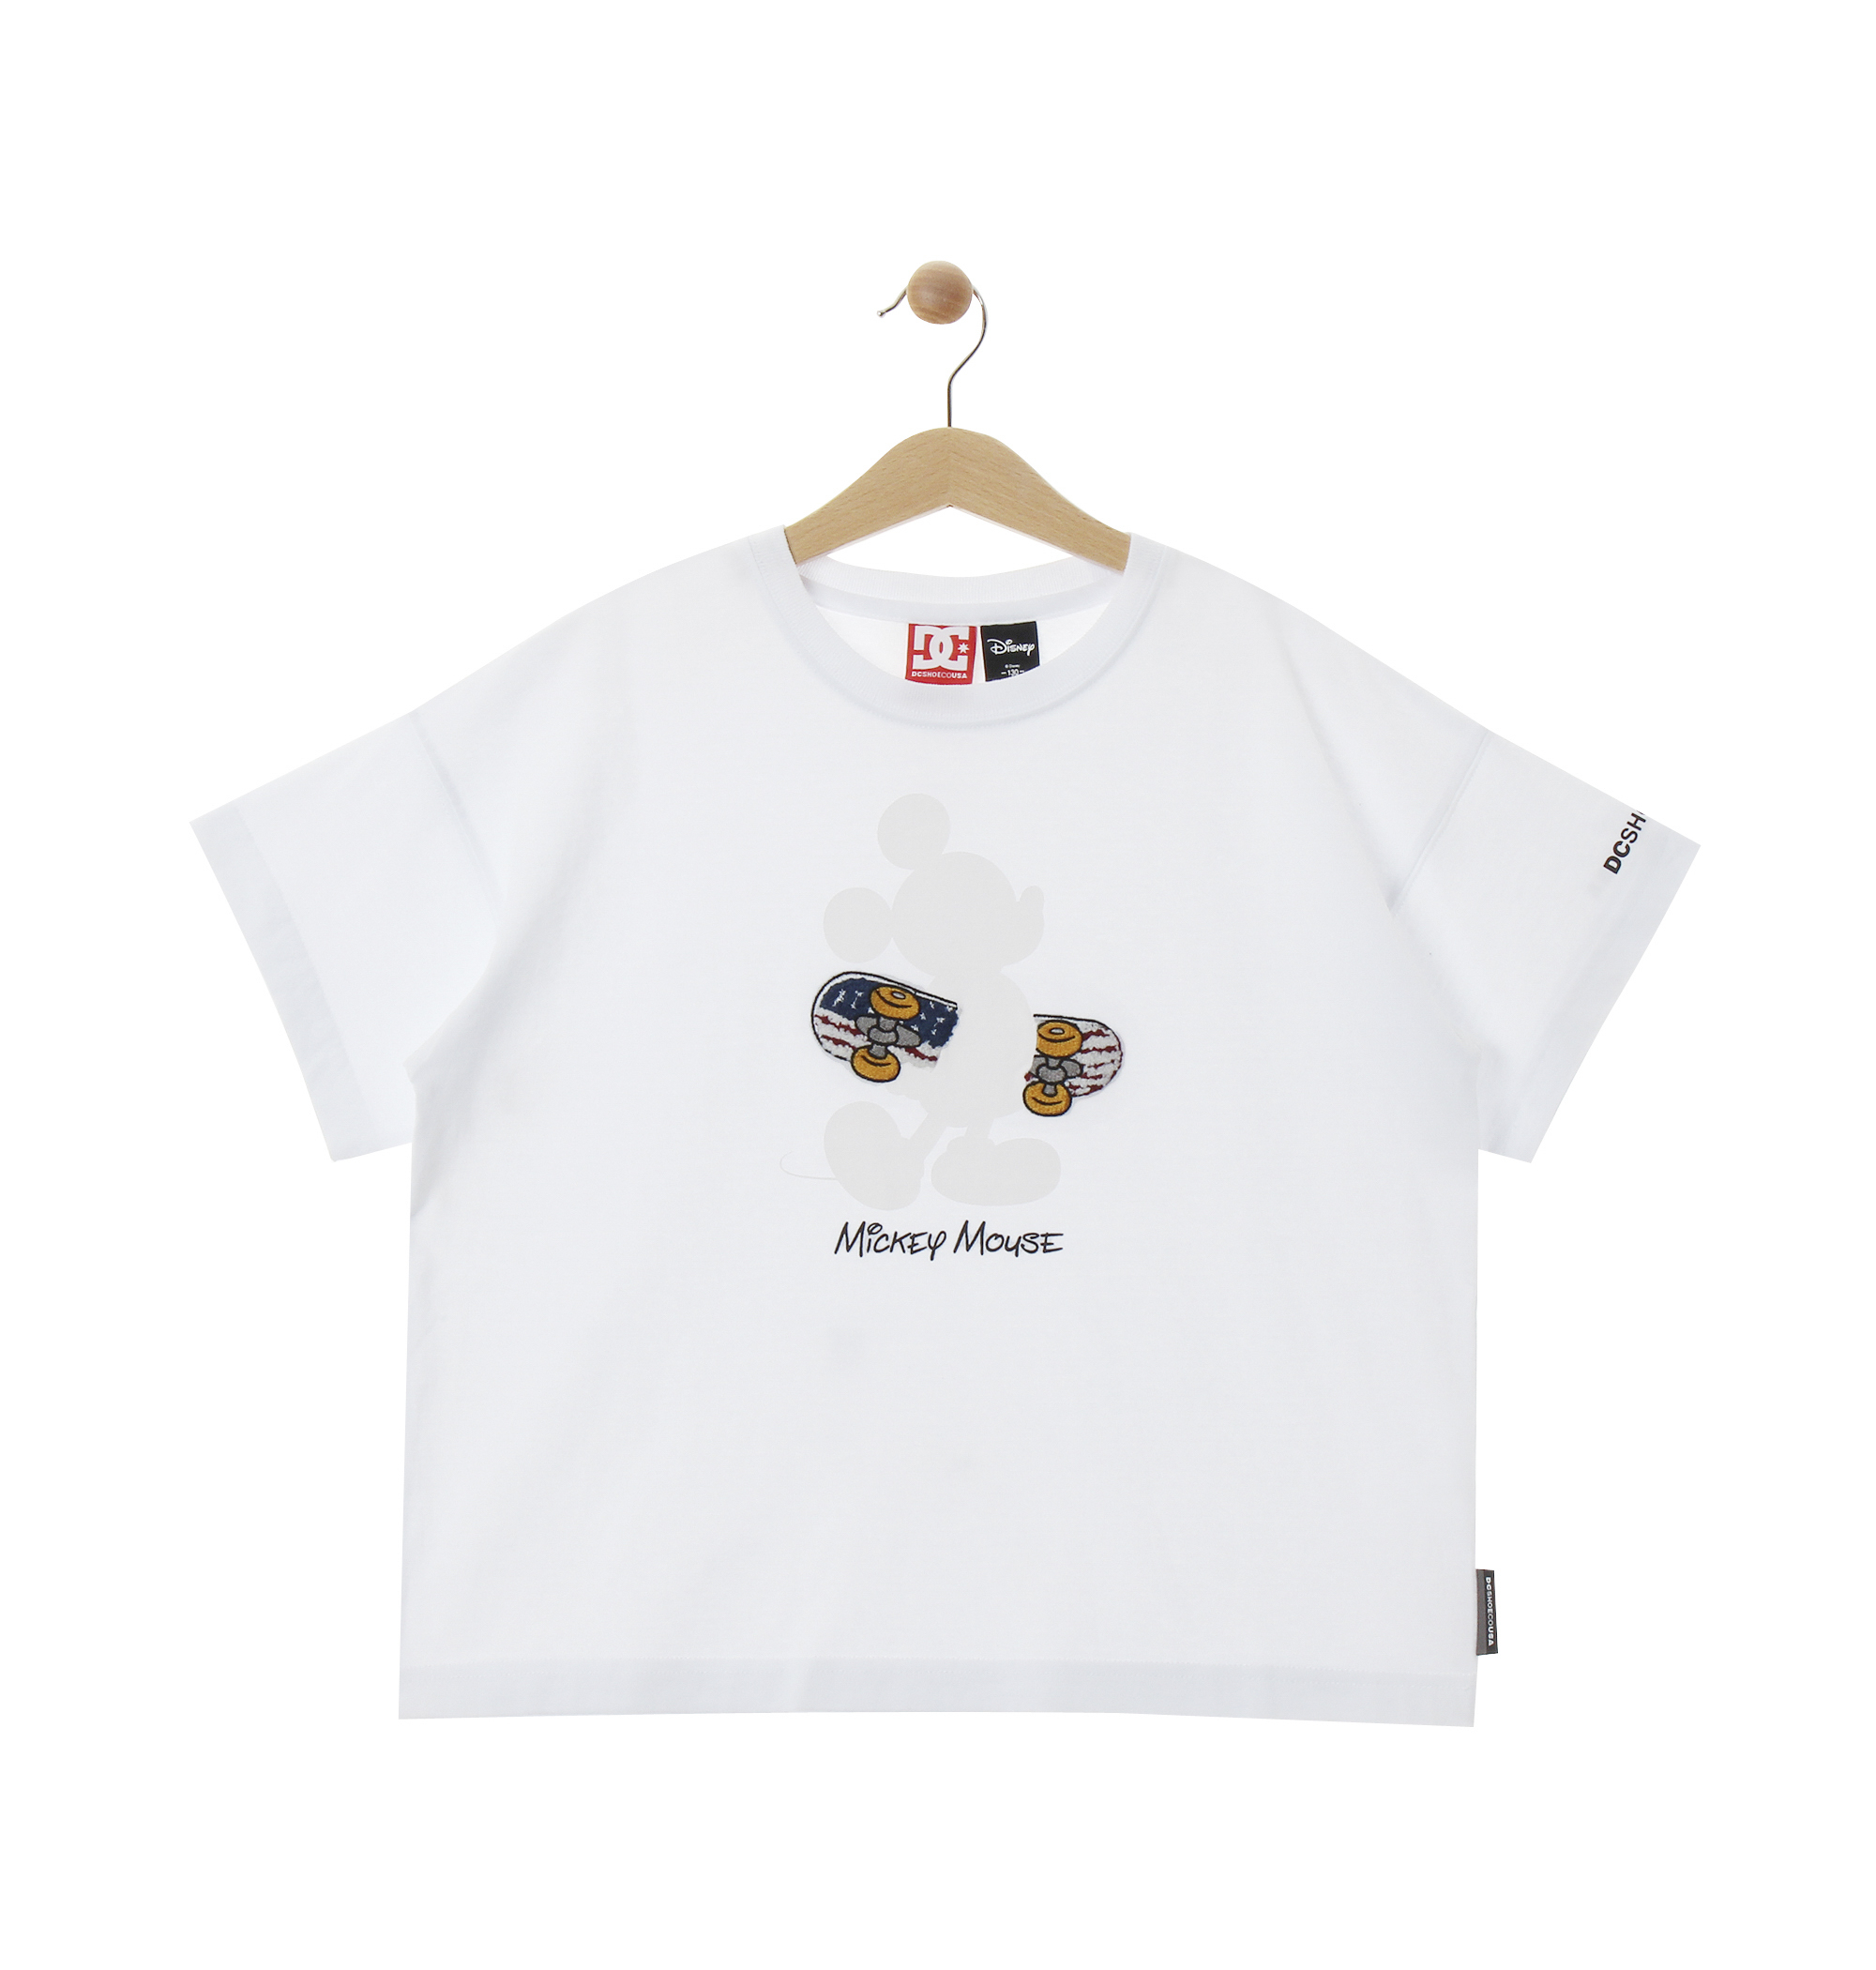 30%OFF！ 20 KD DISNEY SHADOW MICKEY SS ミッキーマウスのシルエットプリントと相良刺繍のボードを組み合わせた印象的なデザインのクルーネック半袖Tシャツ